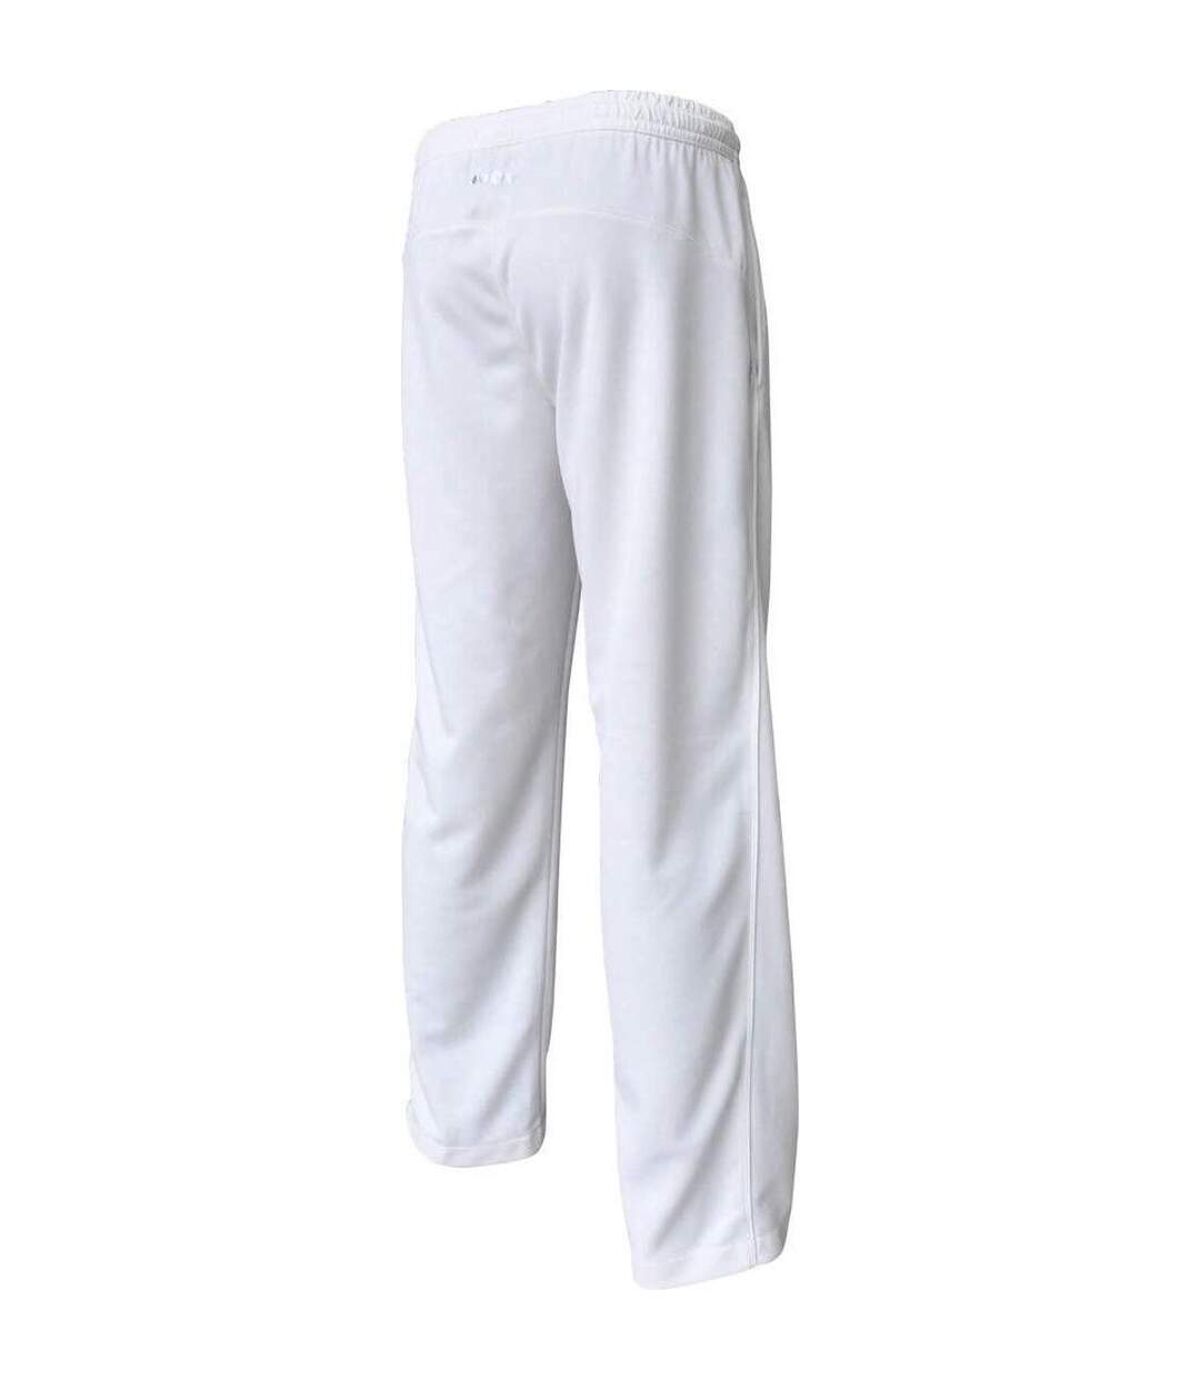 Kookaburra Mens Pro Players Cricket Pants (White)